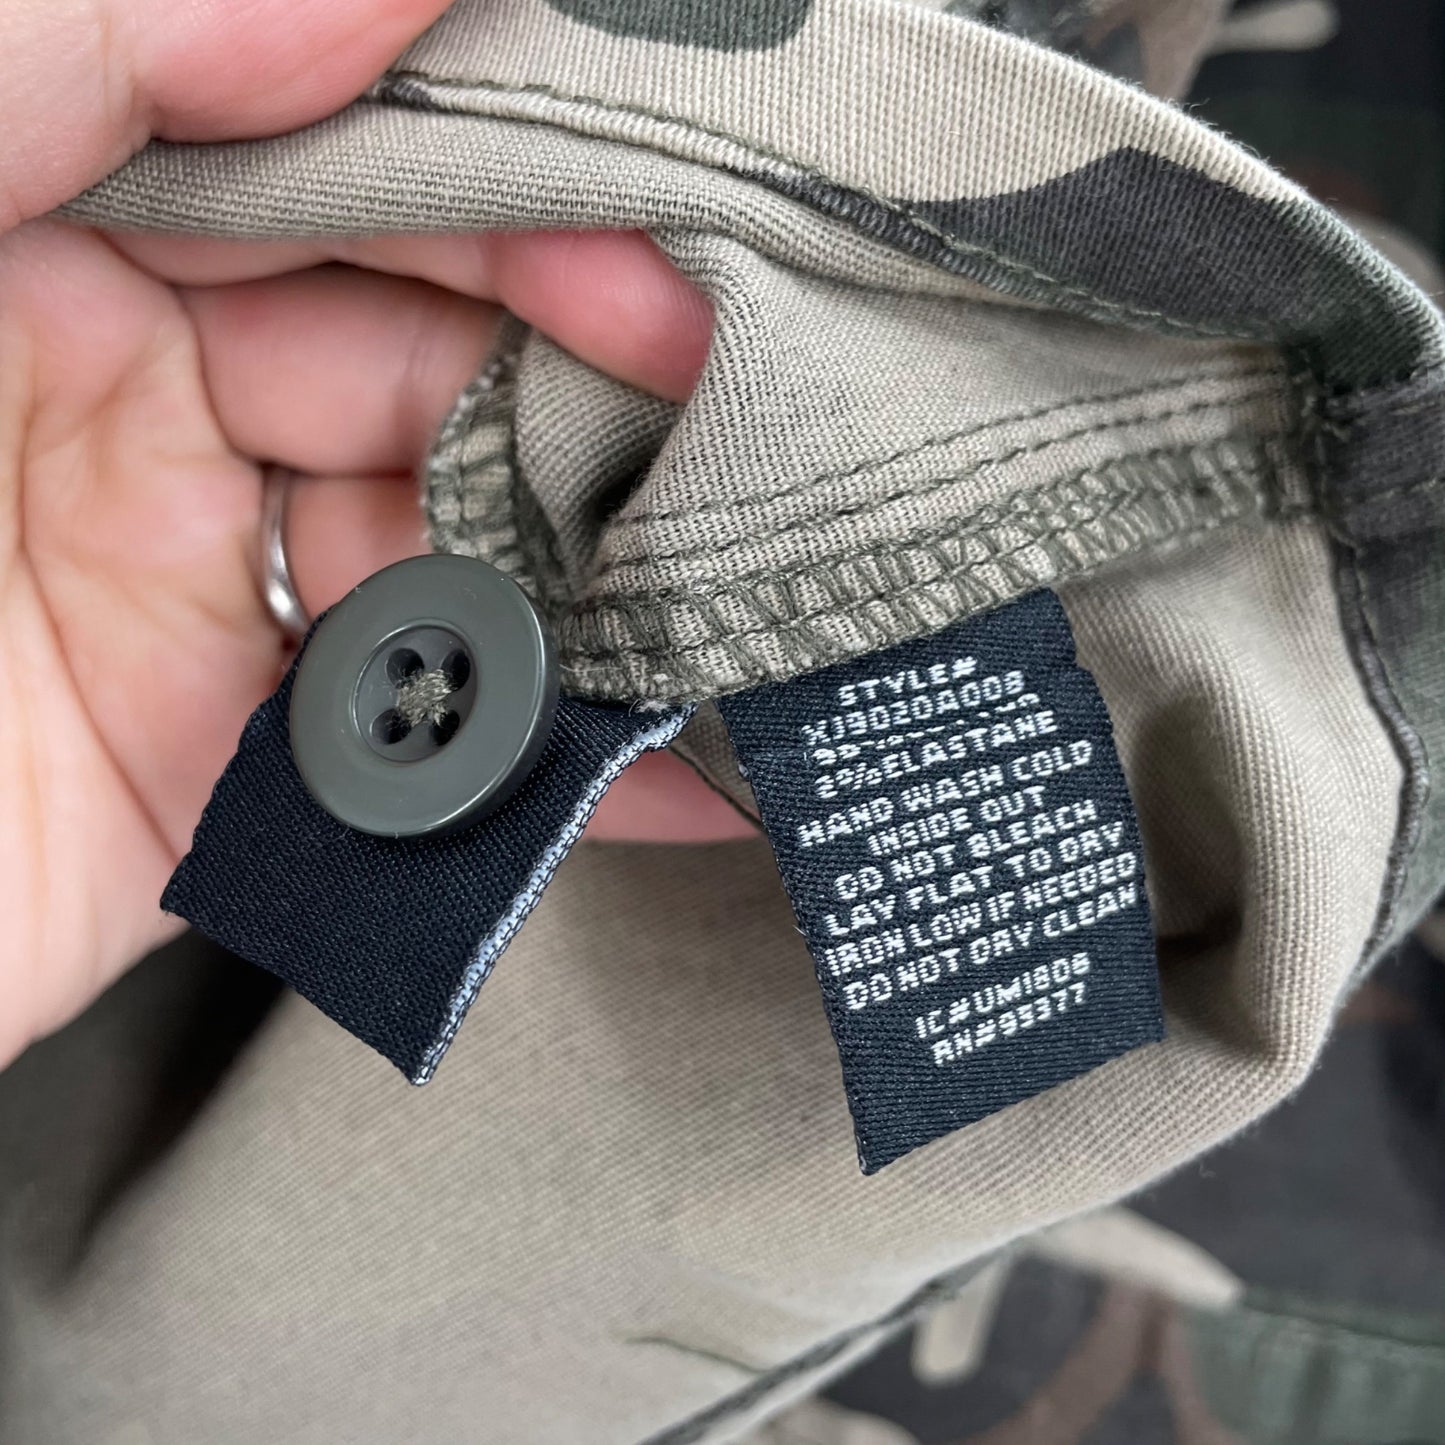 Sanctuary Camo Print Button Up Utility Jacket Womens Size Large Pockets Casual